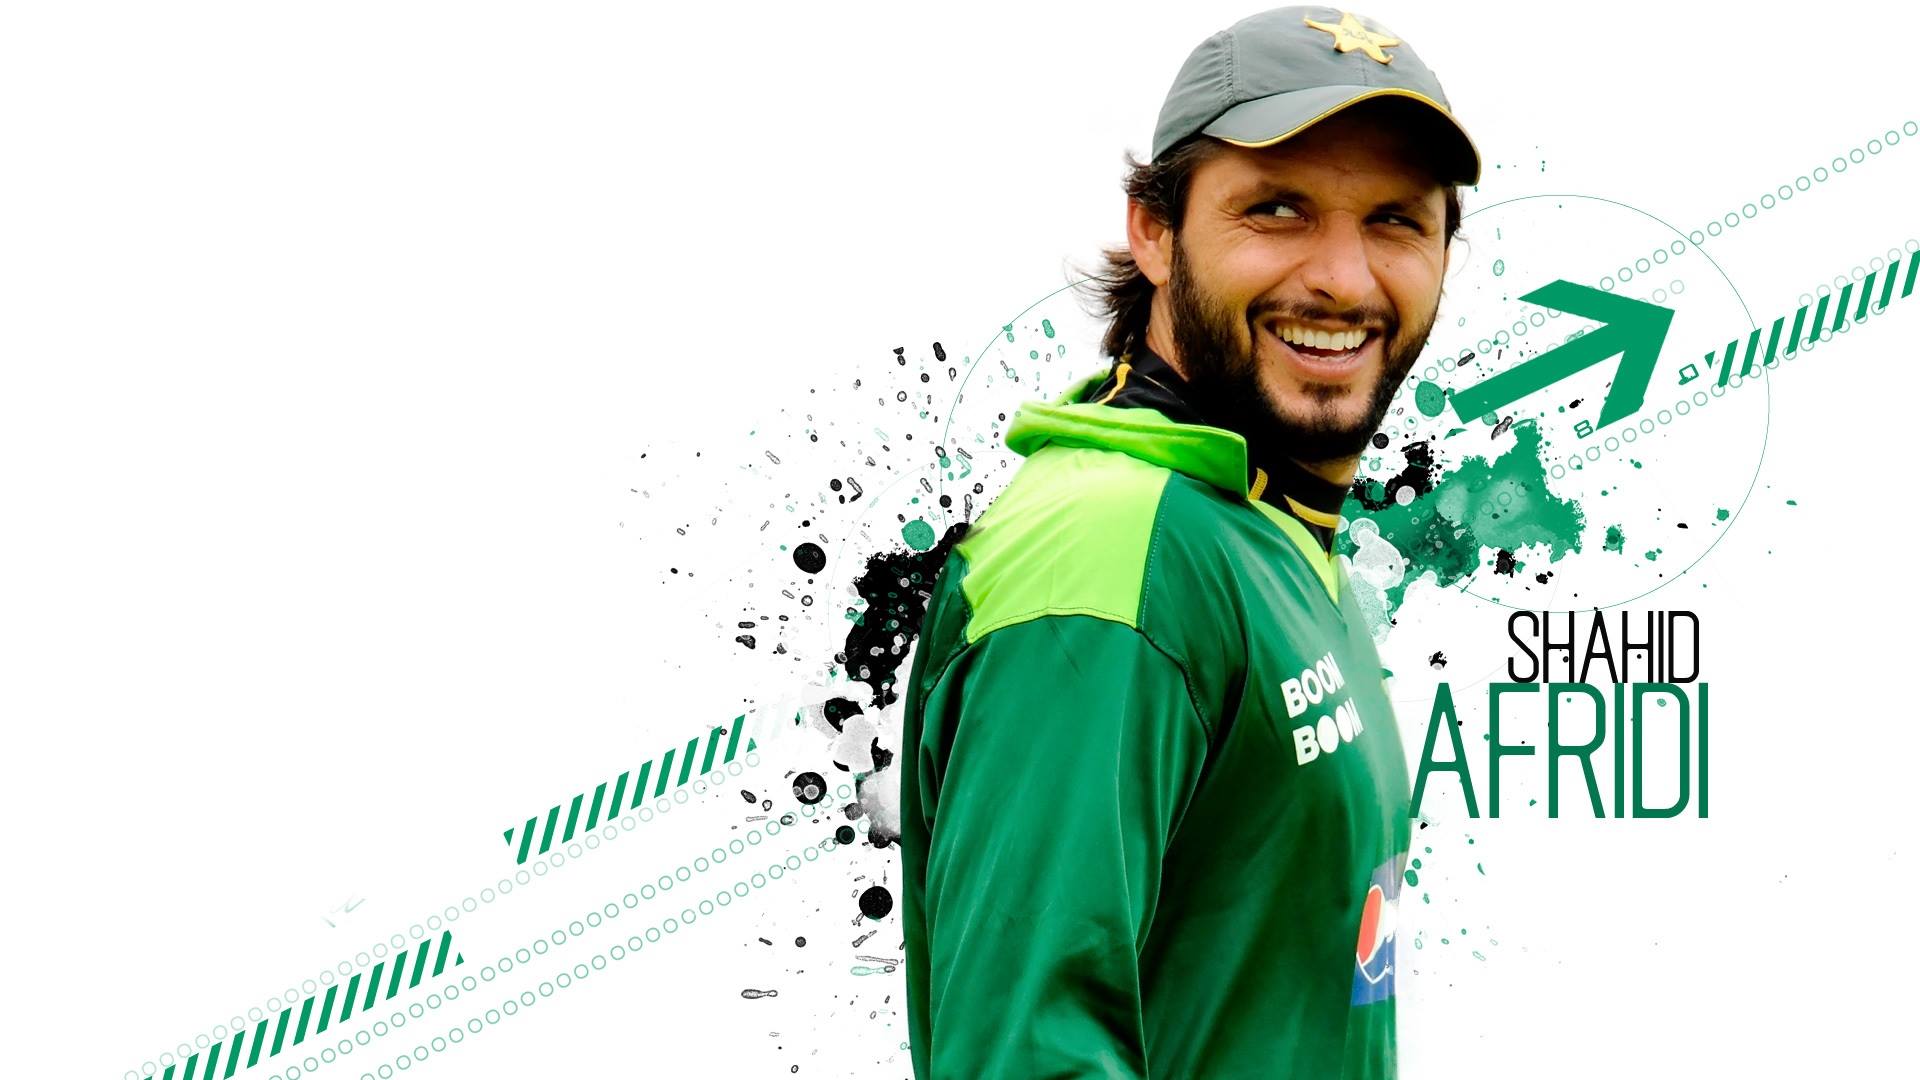 Shahid Afridi 2015 Pakistan Cricketer Wallpaper free desktop